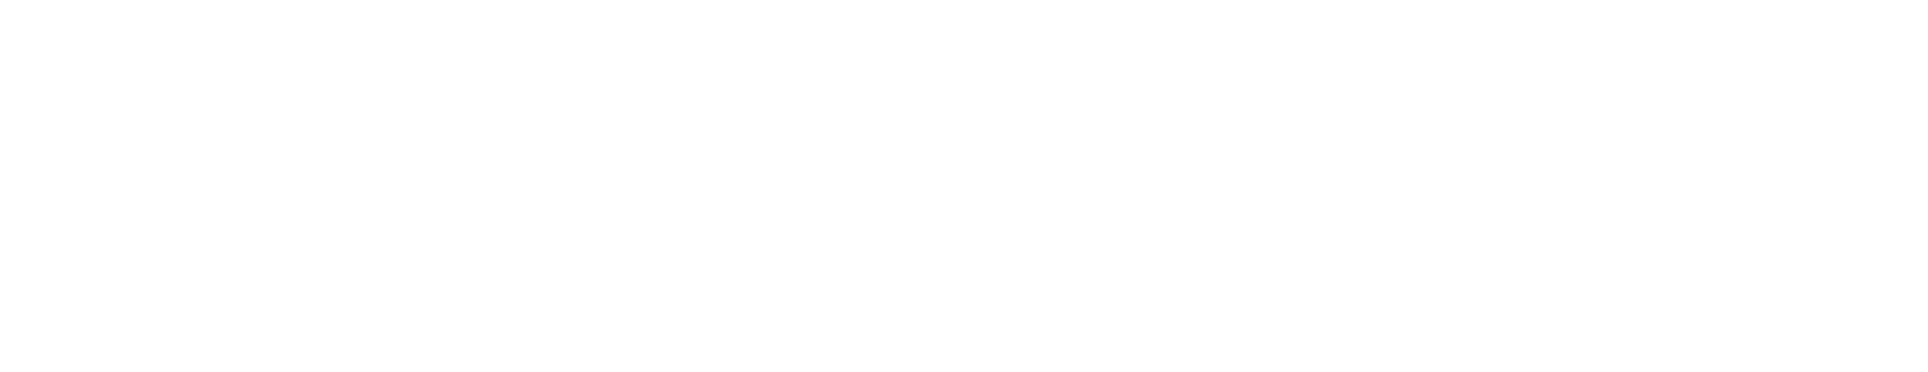 FUKE STUDIO（福家スタヂオ） STUDIO & PHOTO GARDEN RENEWAL!